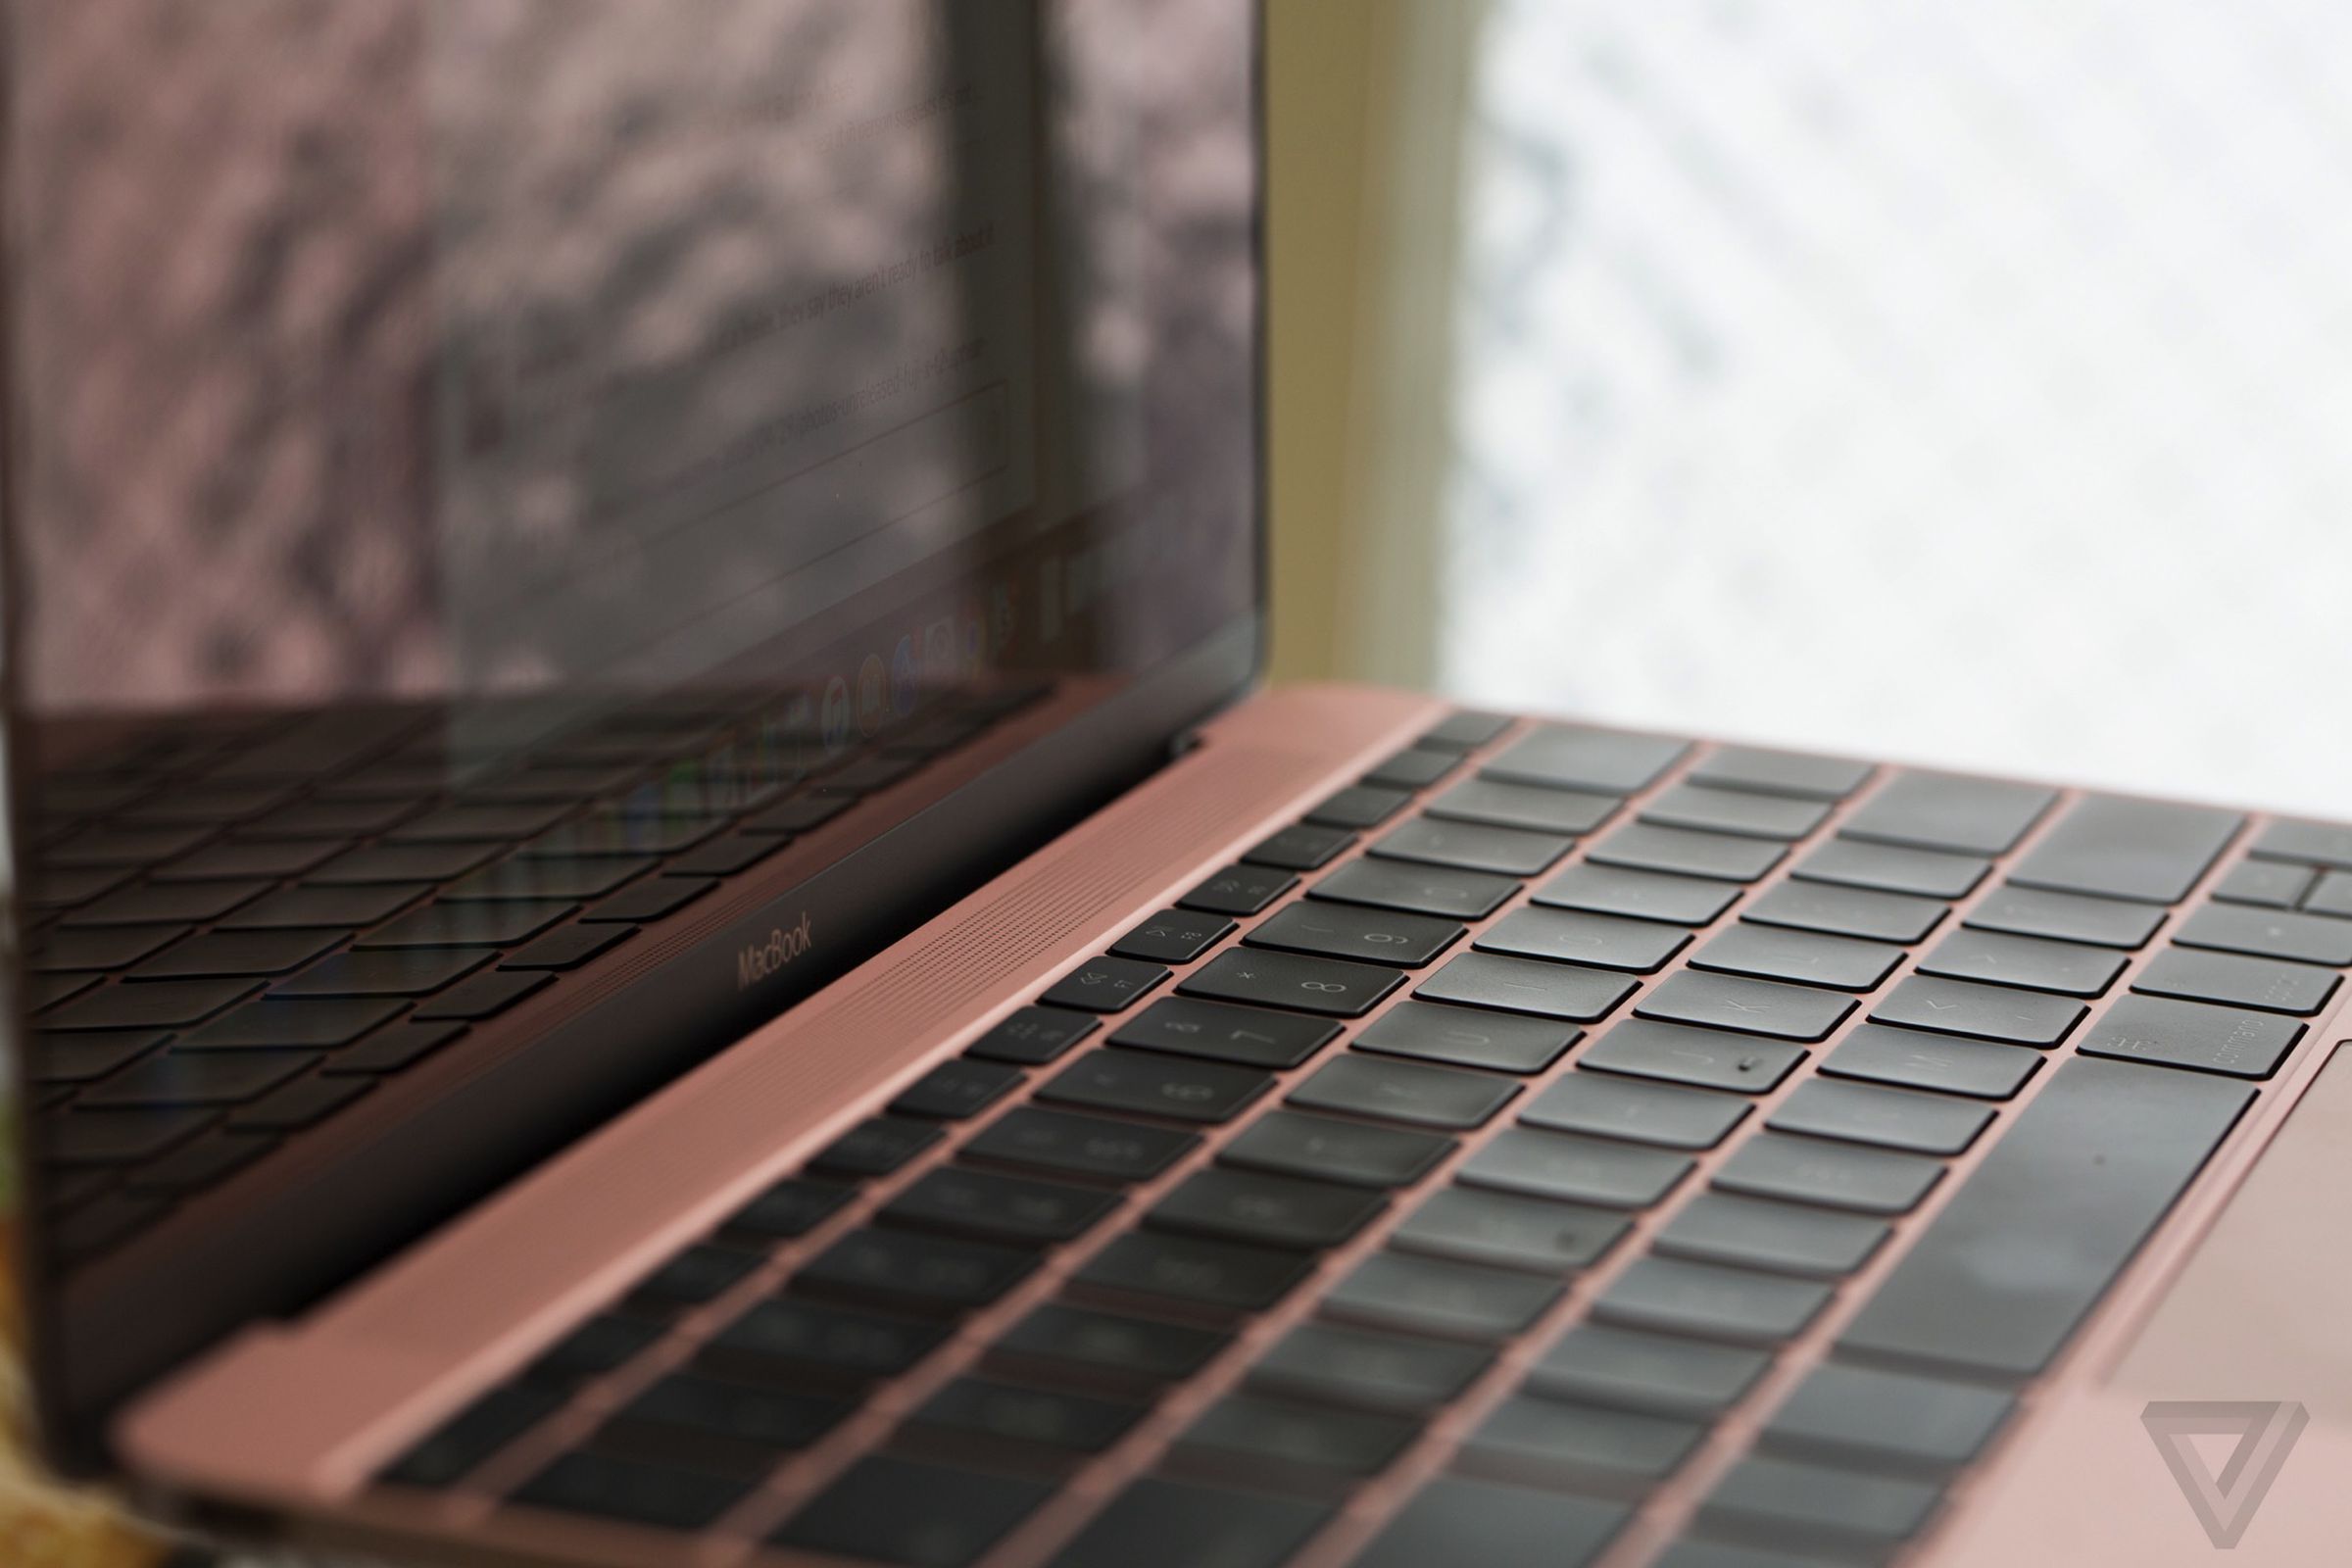 Macbook-2016-review-pink-laptop